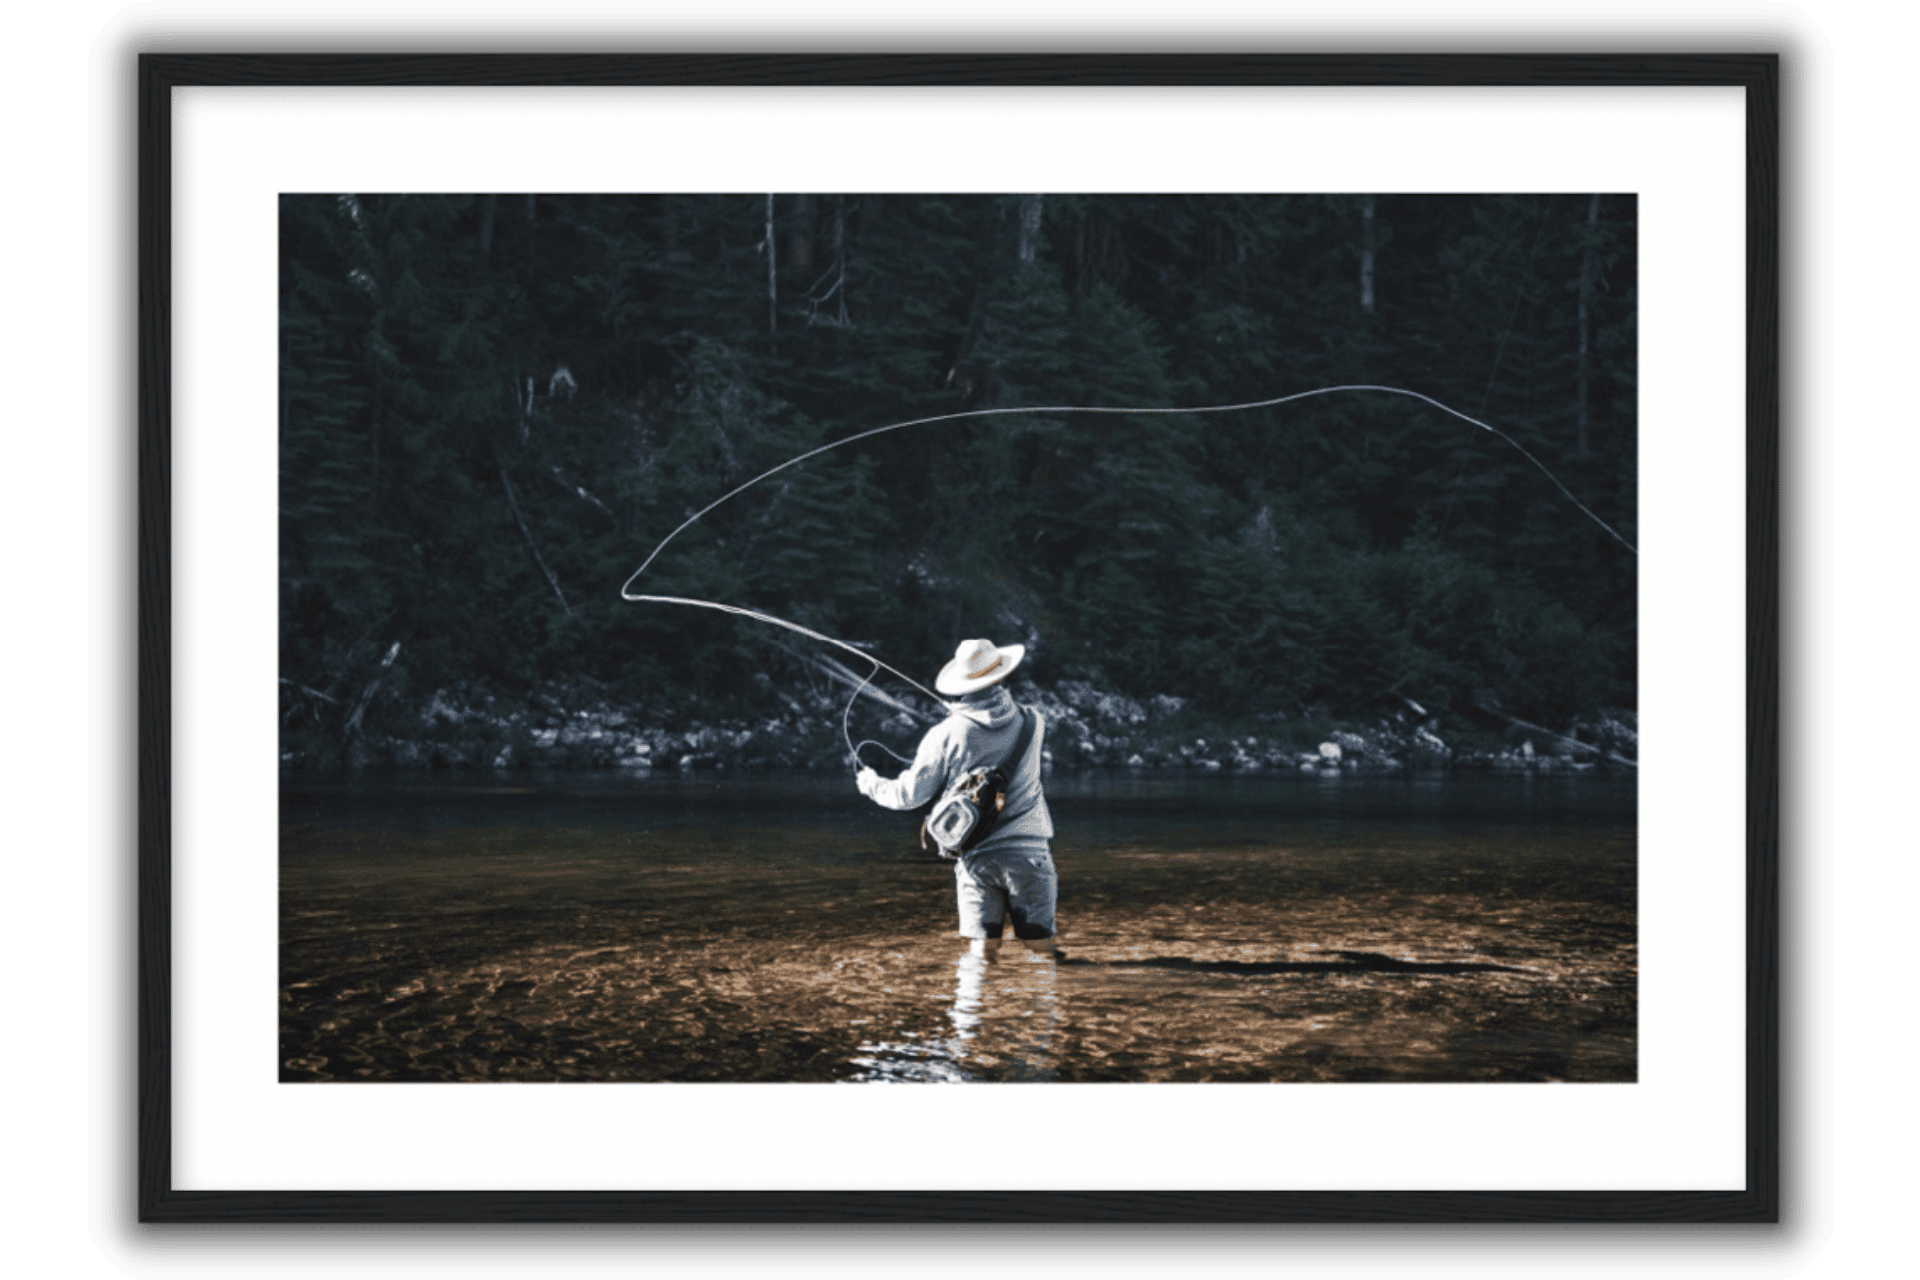 https://pathfindercreative.com/wp-content/uploads/2022/08/Fishing-the-Lochsa-Poster-black-Frame.png